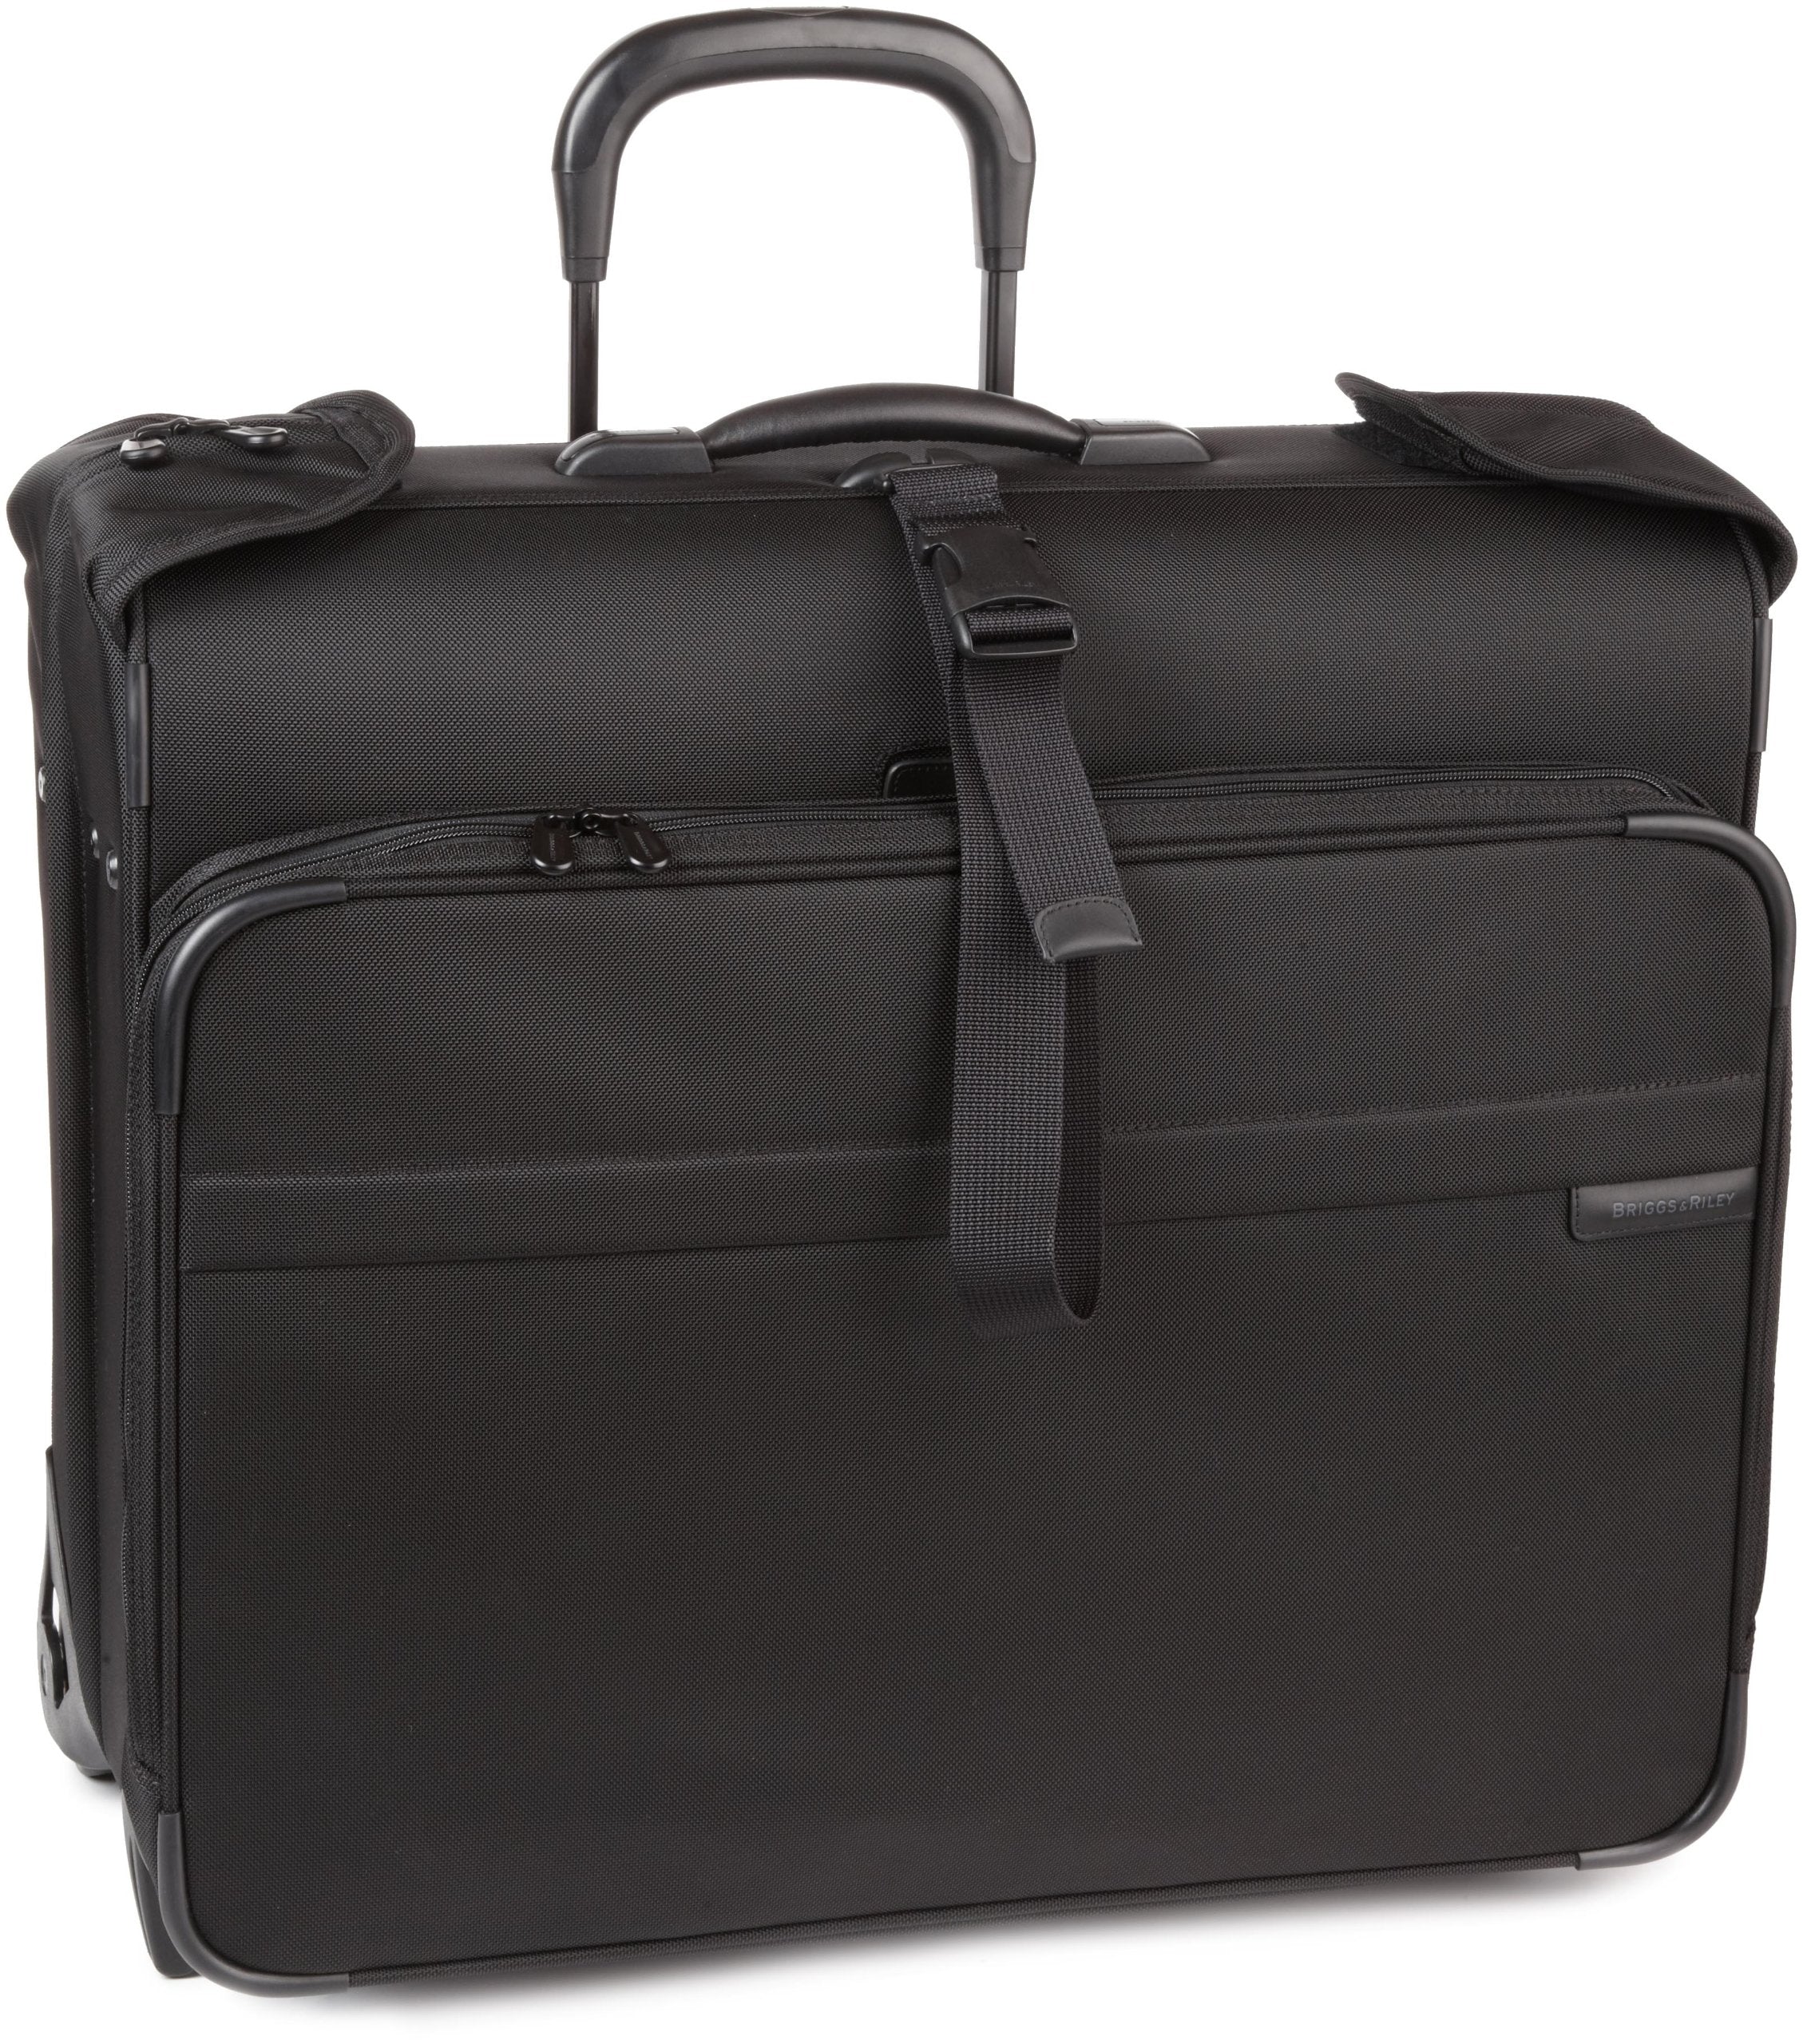 Baseline Tall Carry-on 2-Wheel Garment Bag